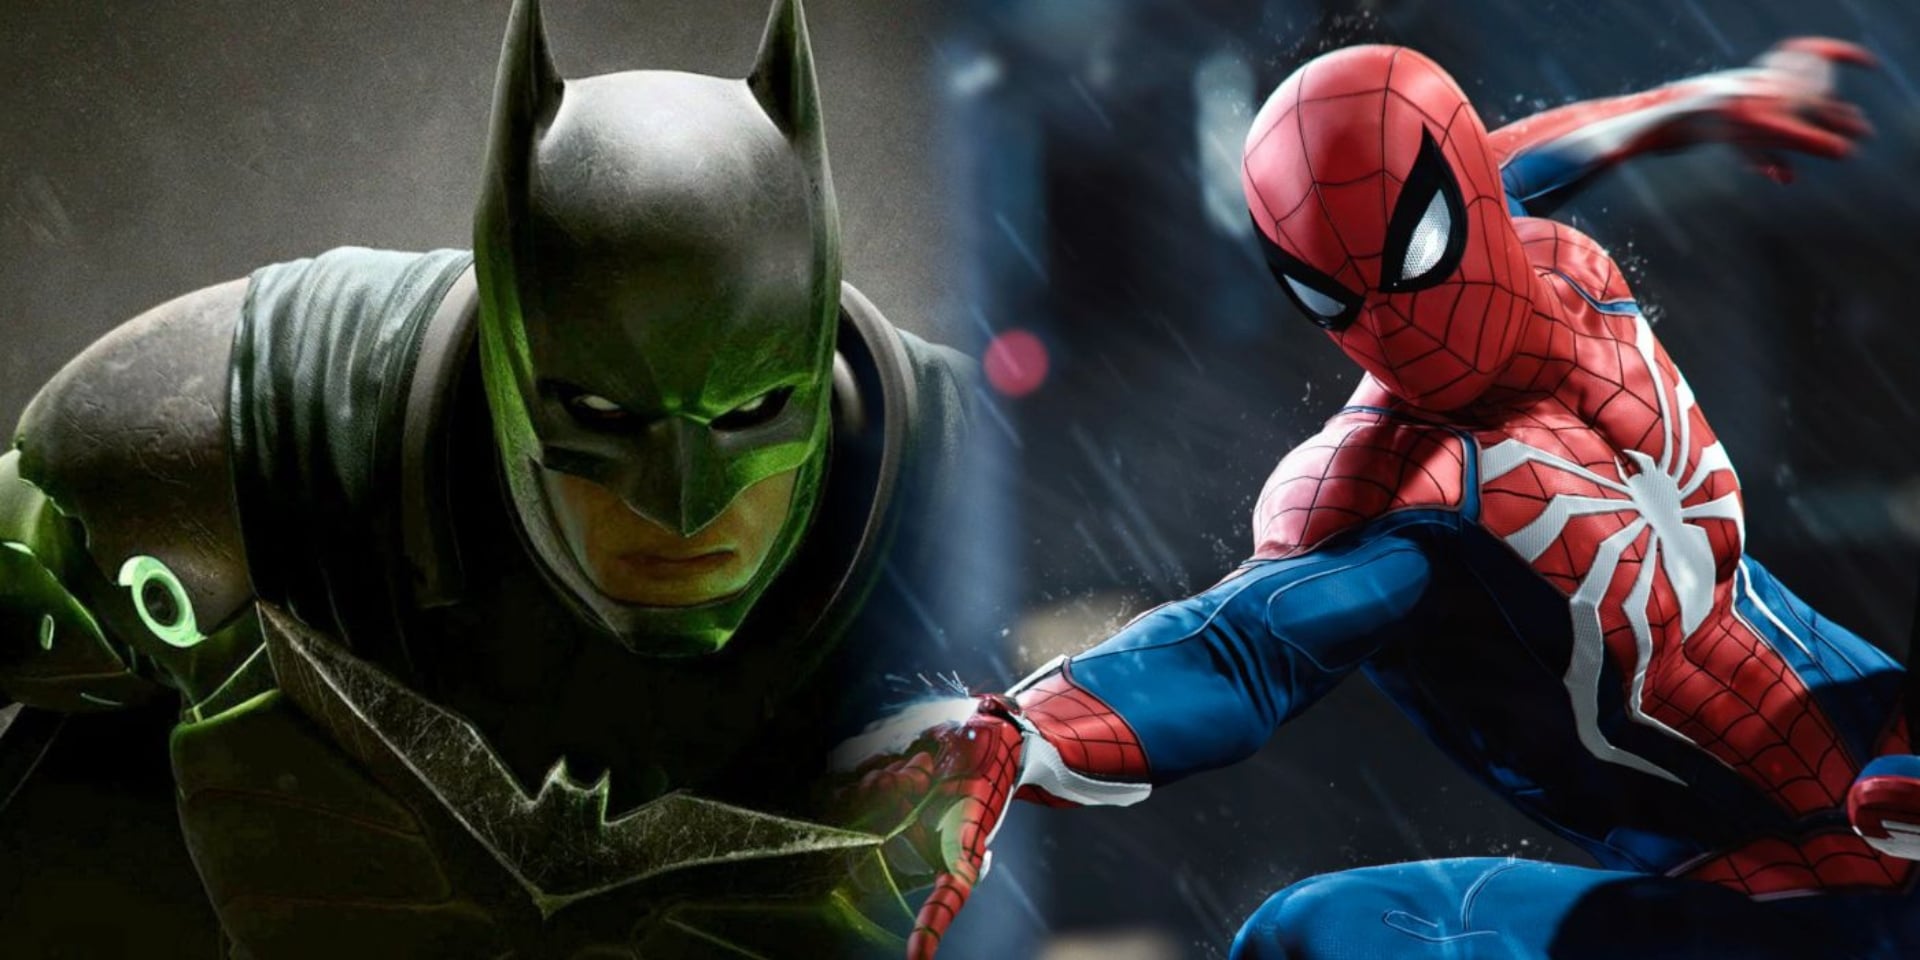 Mortal-Kombat-Injustice-Batman-Spider-Man-Ed-Boon-Fight-GamersRD (2)